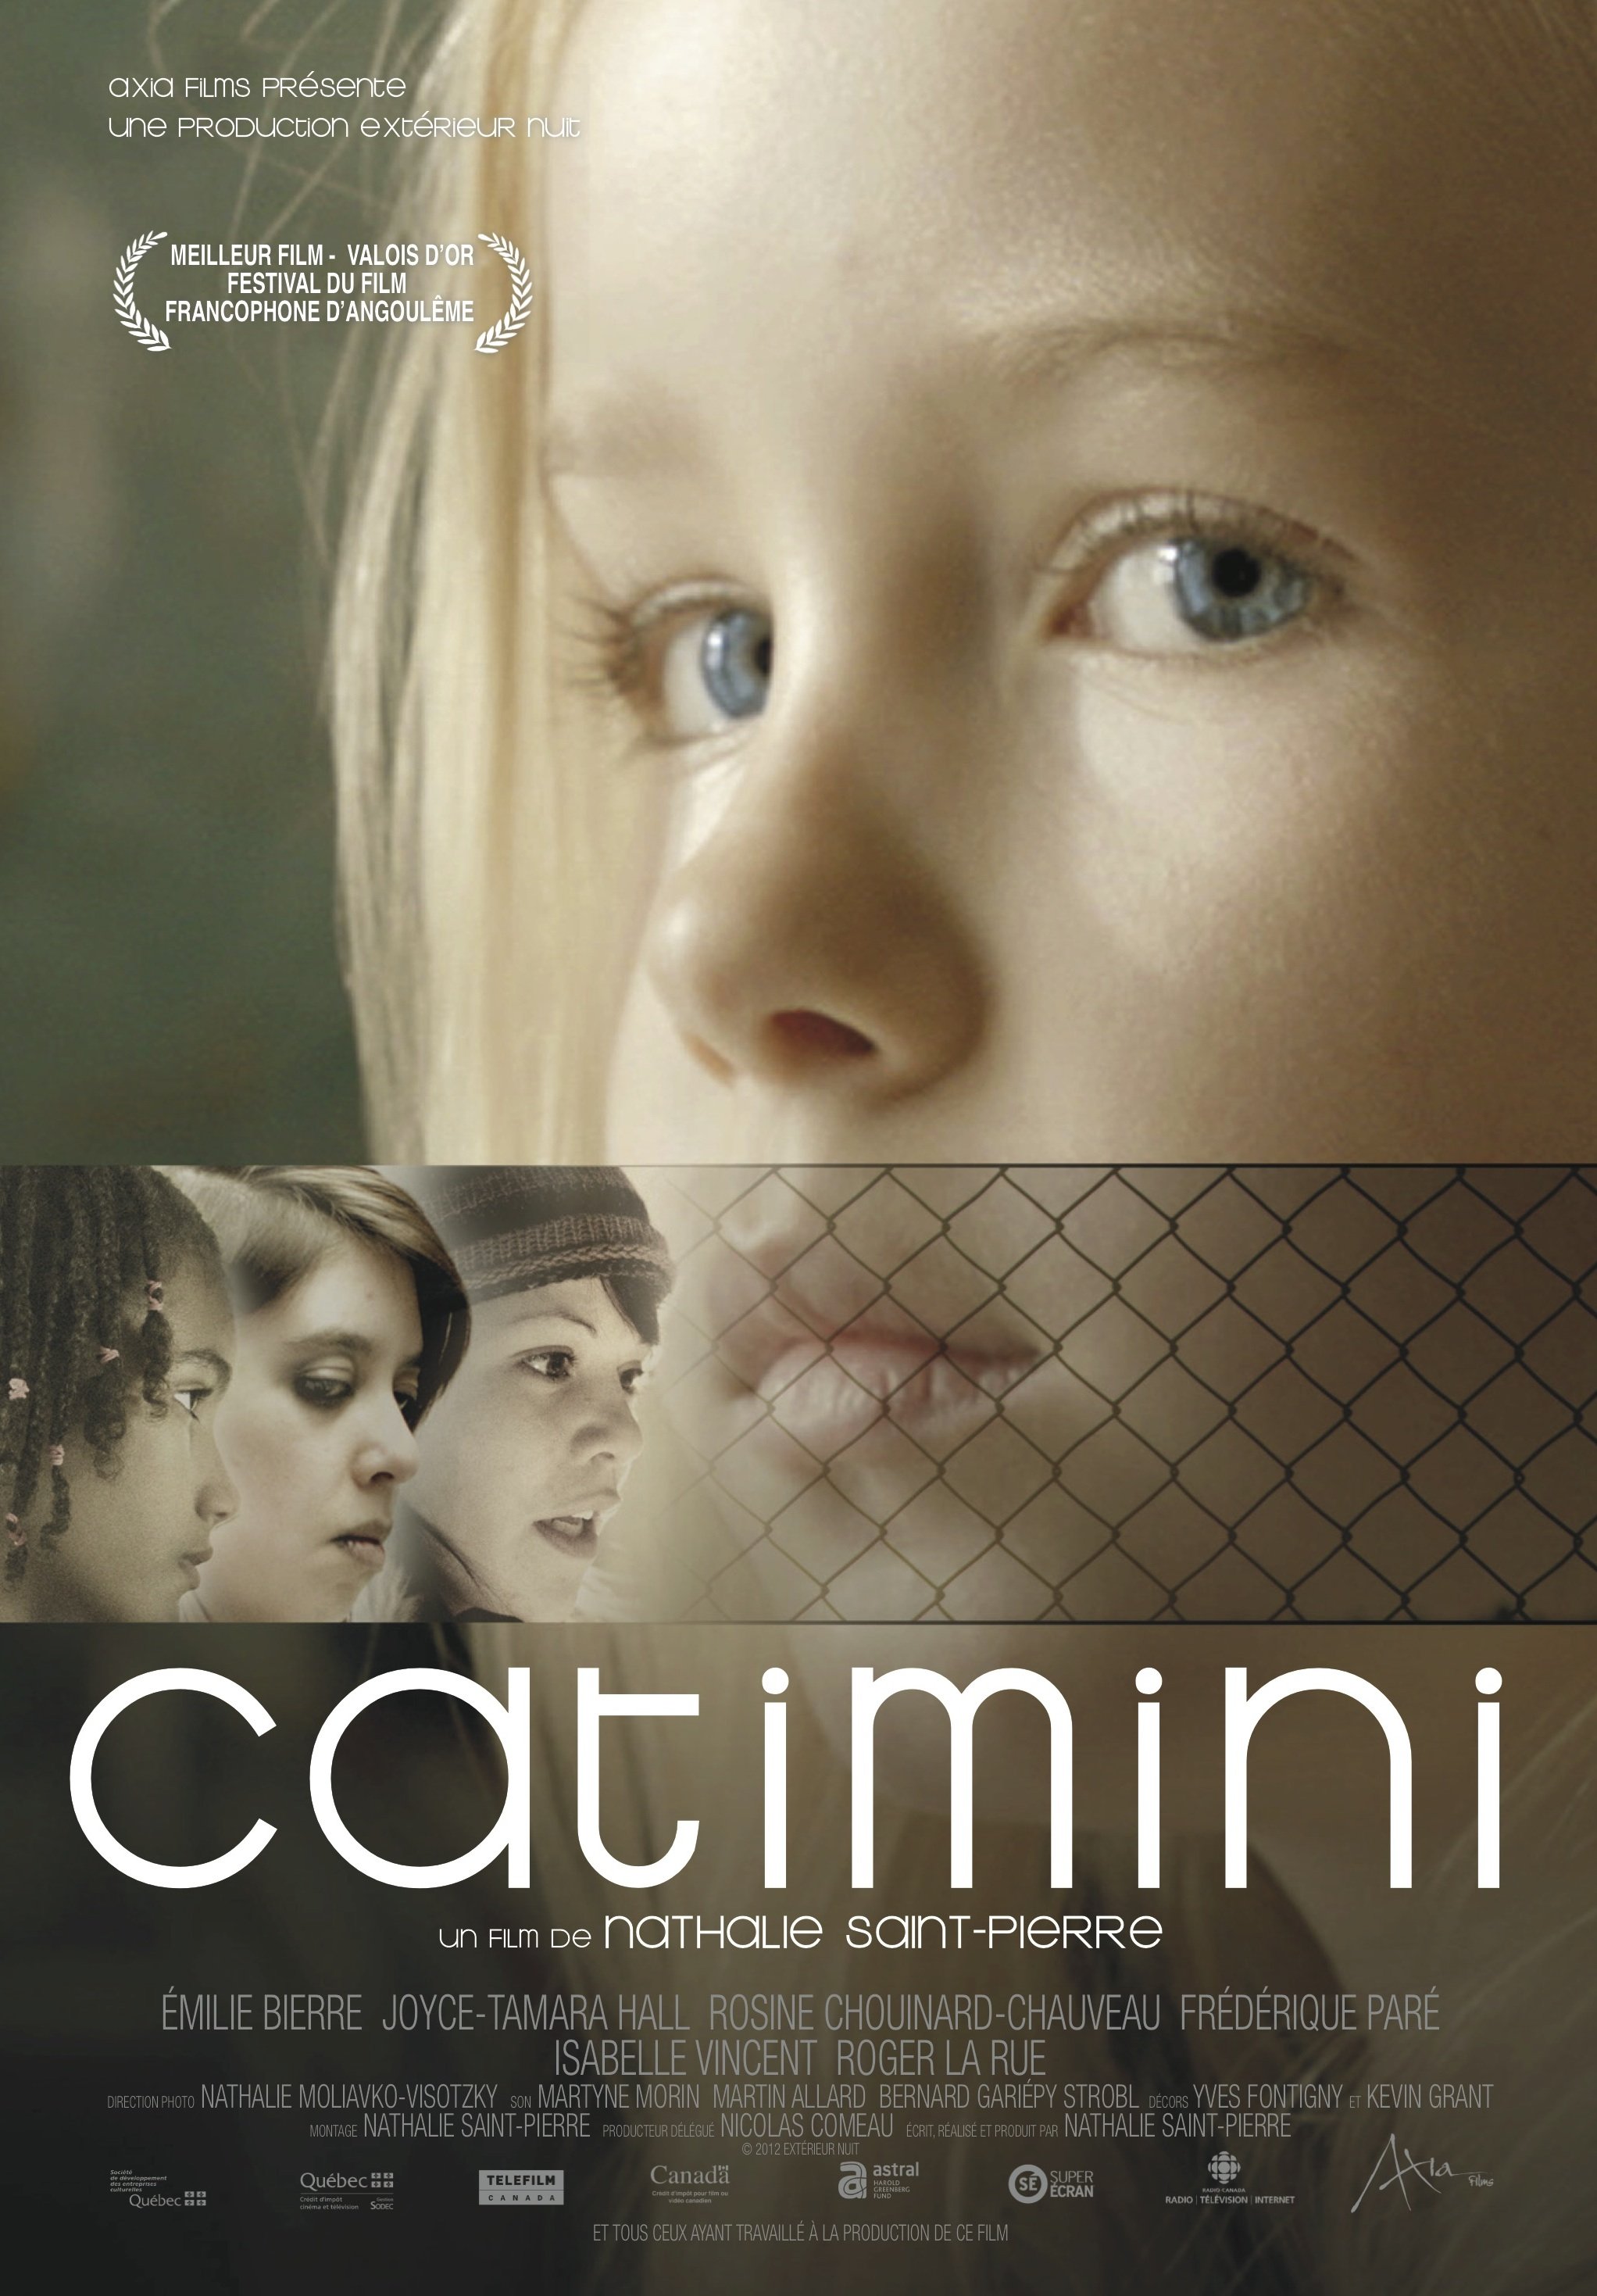 Poster of the movie Catimini